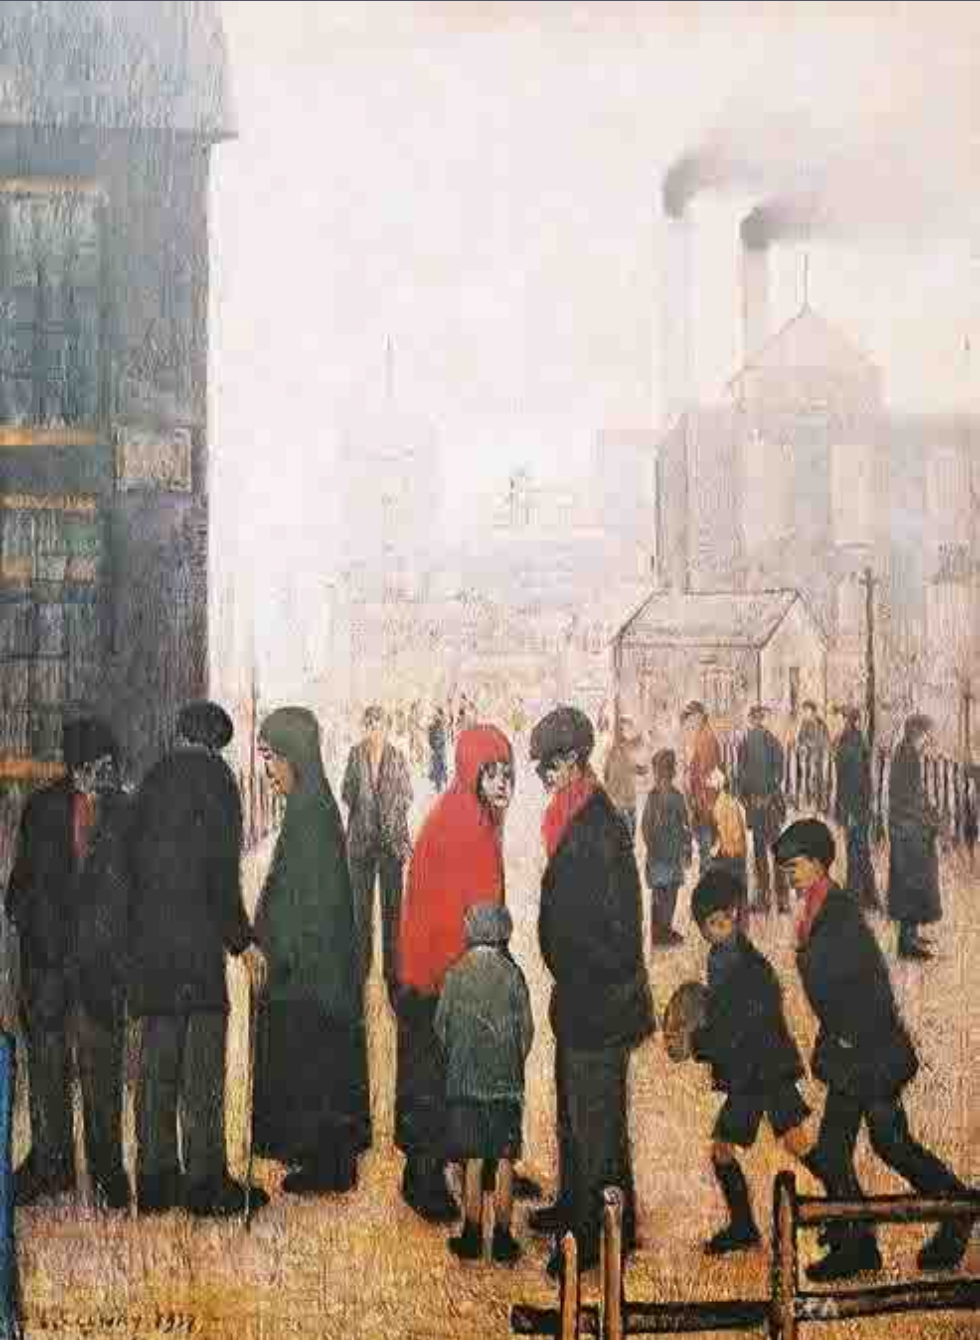 Salford Street Scene (1928) by Laurence Stephen Lowry (1887 - 1976), English artist.